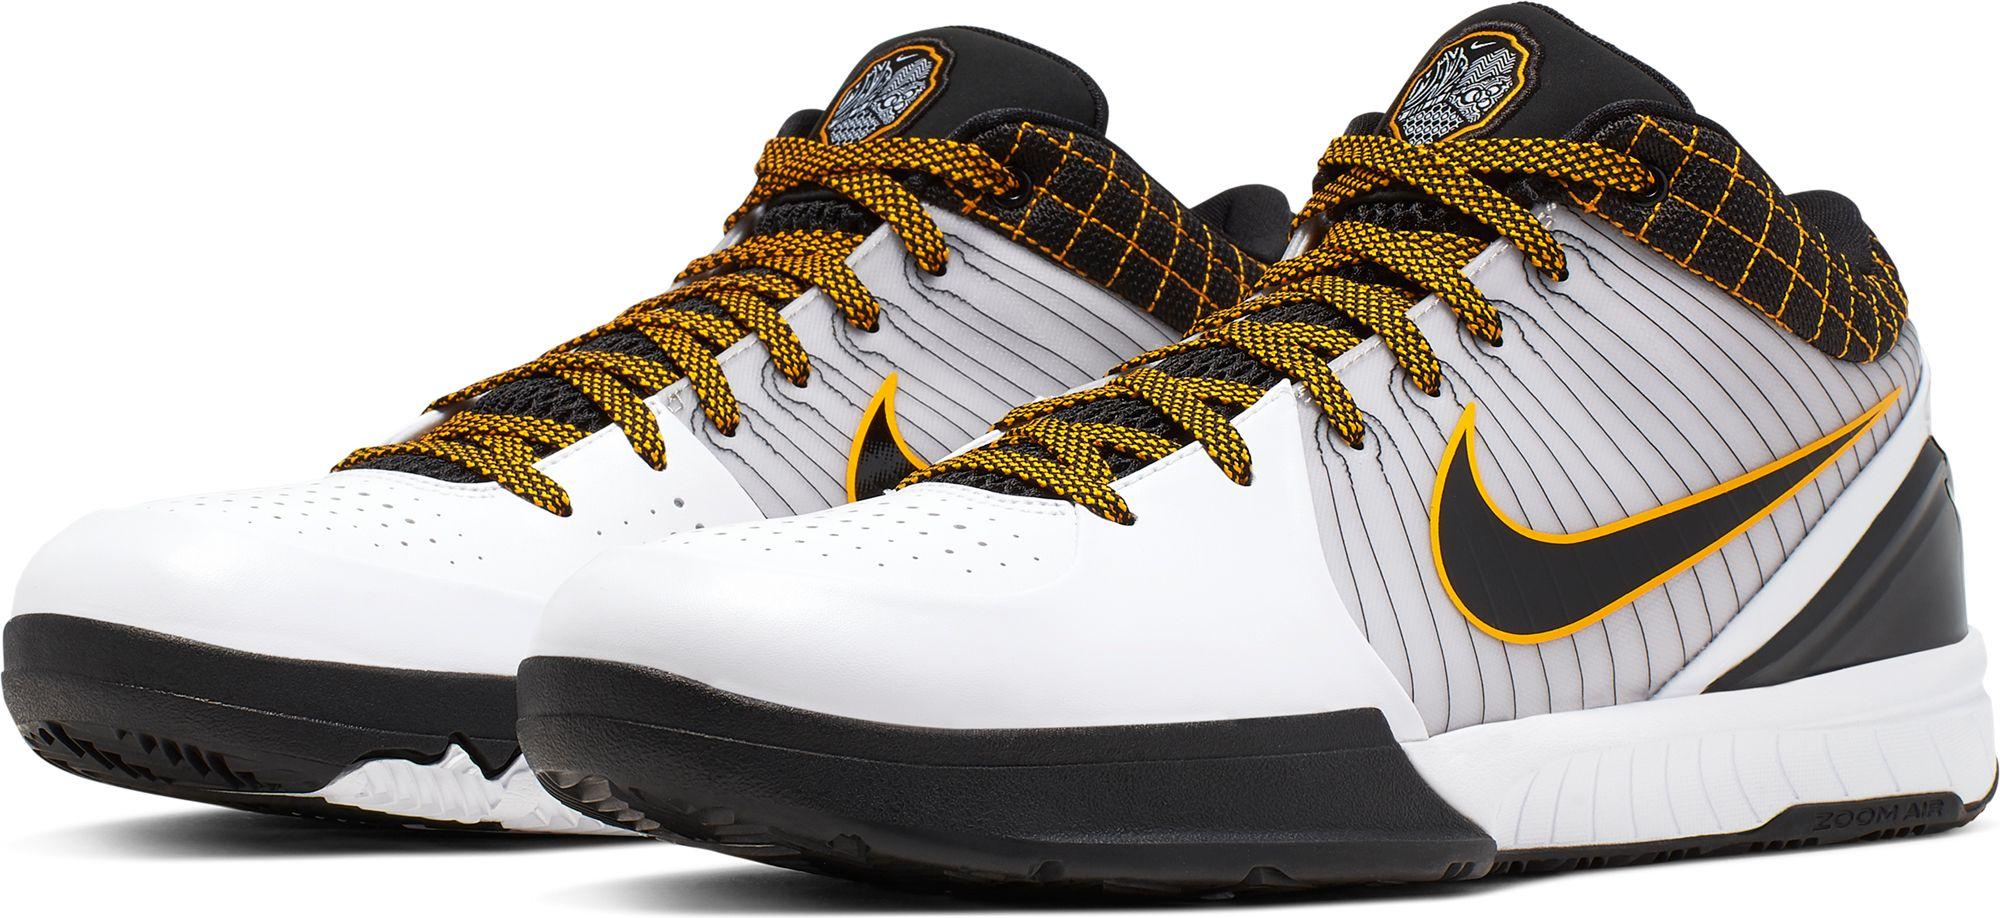 Nike Kobe Iv Protro Basketball Shoes for Men - Lyst